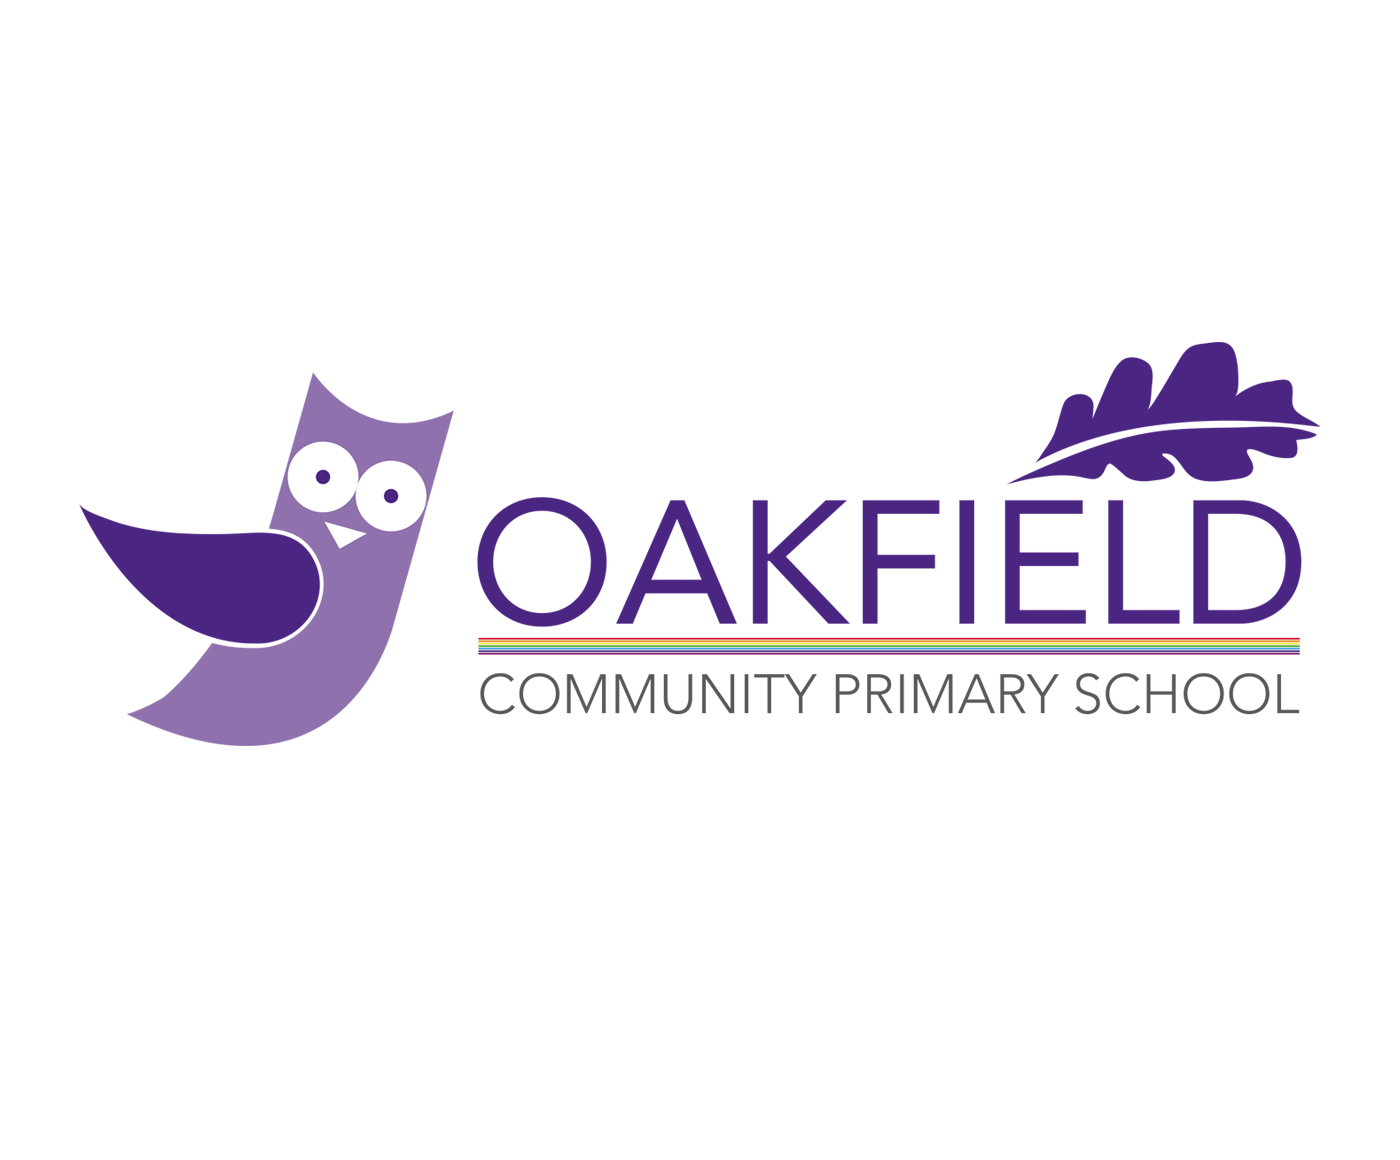 Oakfield Community Primary School